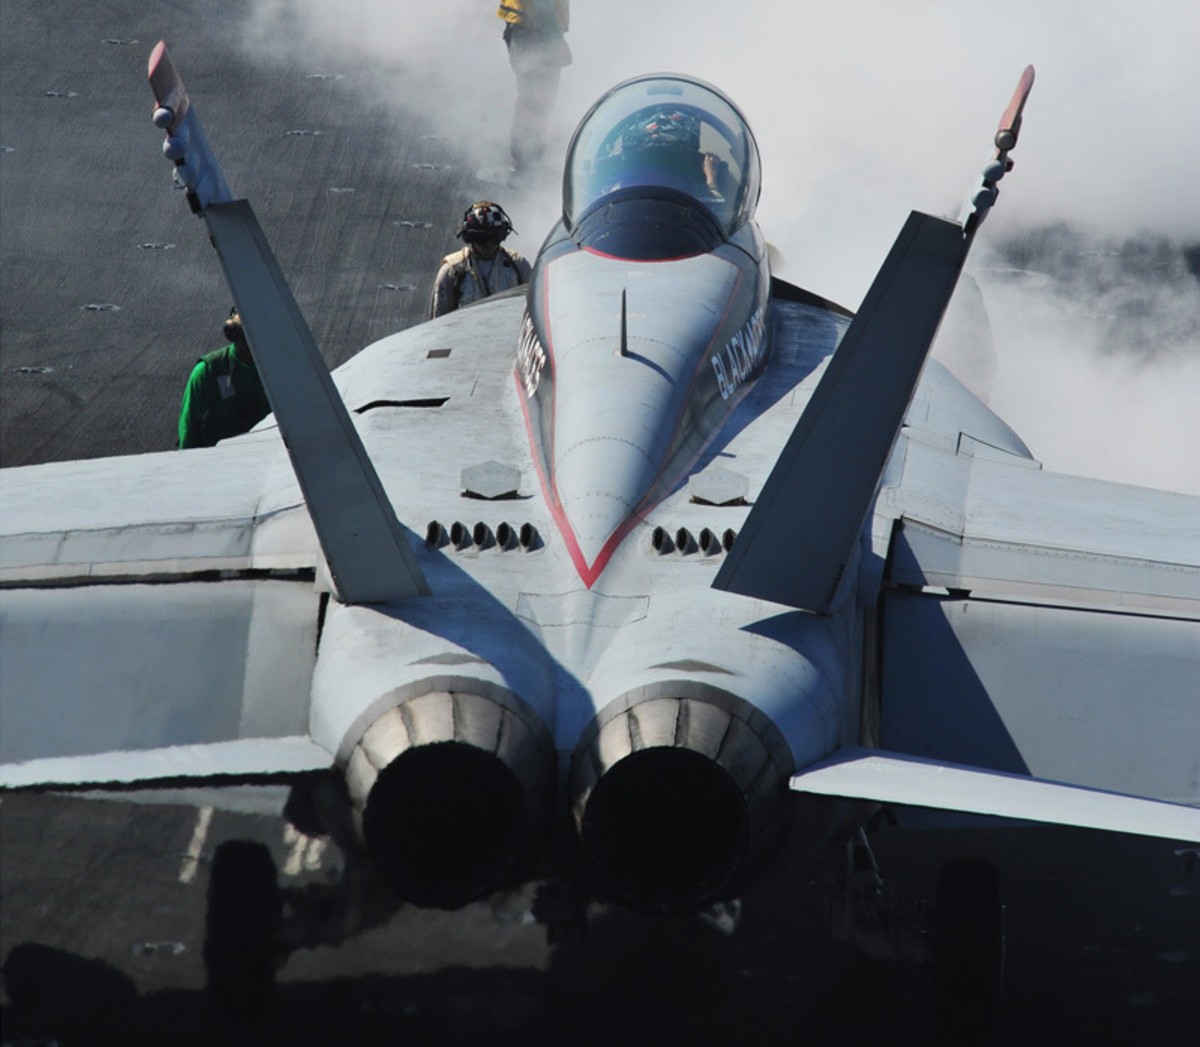 vfa-41 black aces strike fighter squadron f/a-18f super hornet cvw-9 cvn-70 uss john c. stennis us navy 17